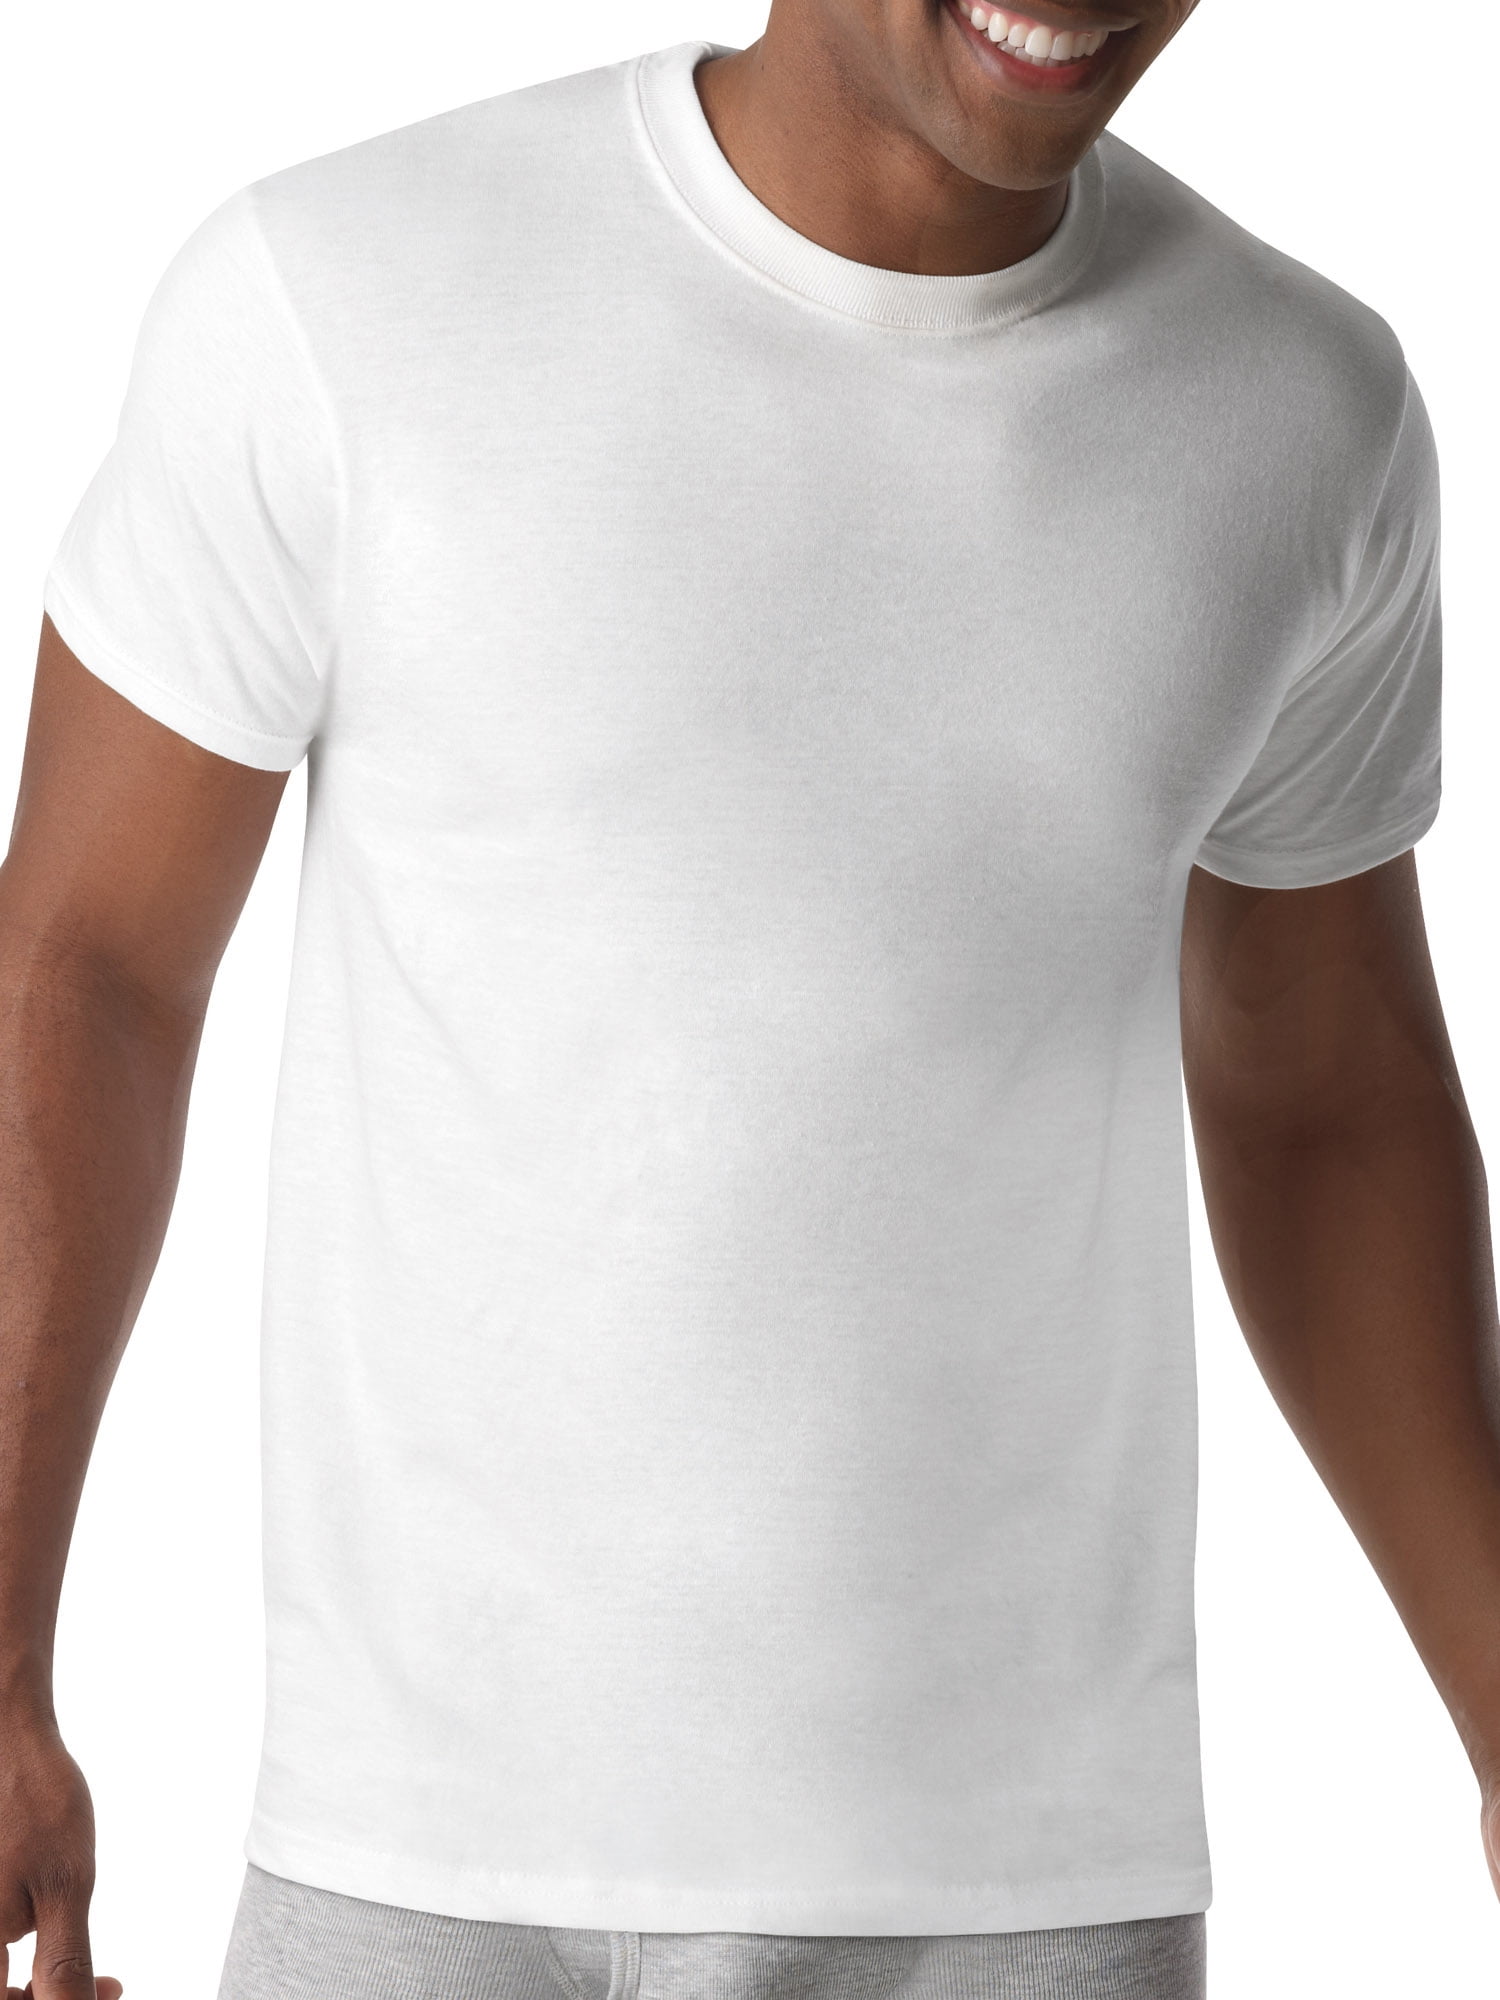 Hanes Mens 3 Pack Comfortblend Short Sleeve T-Shirt